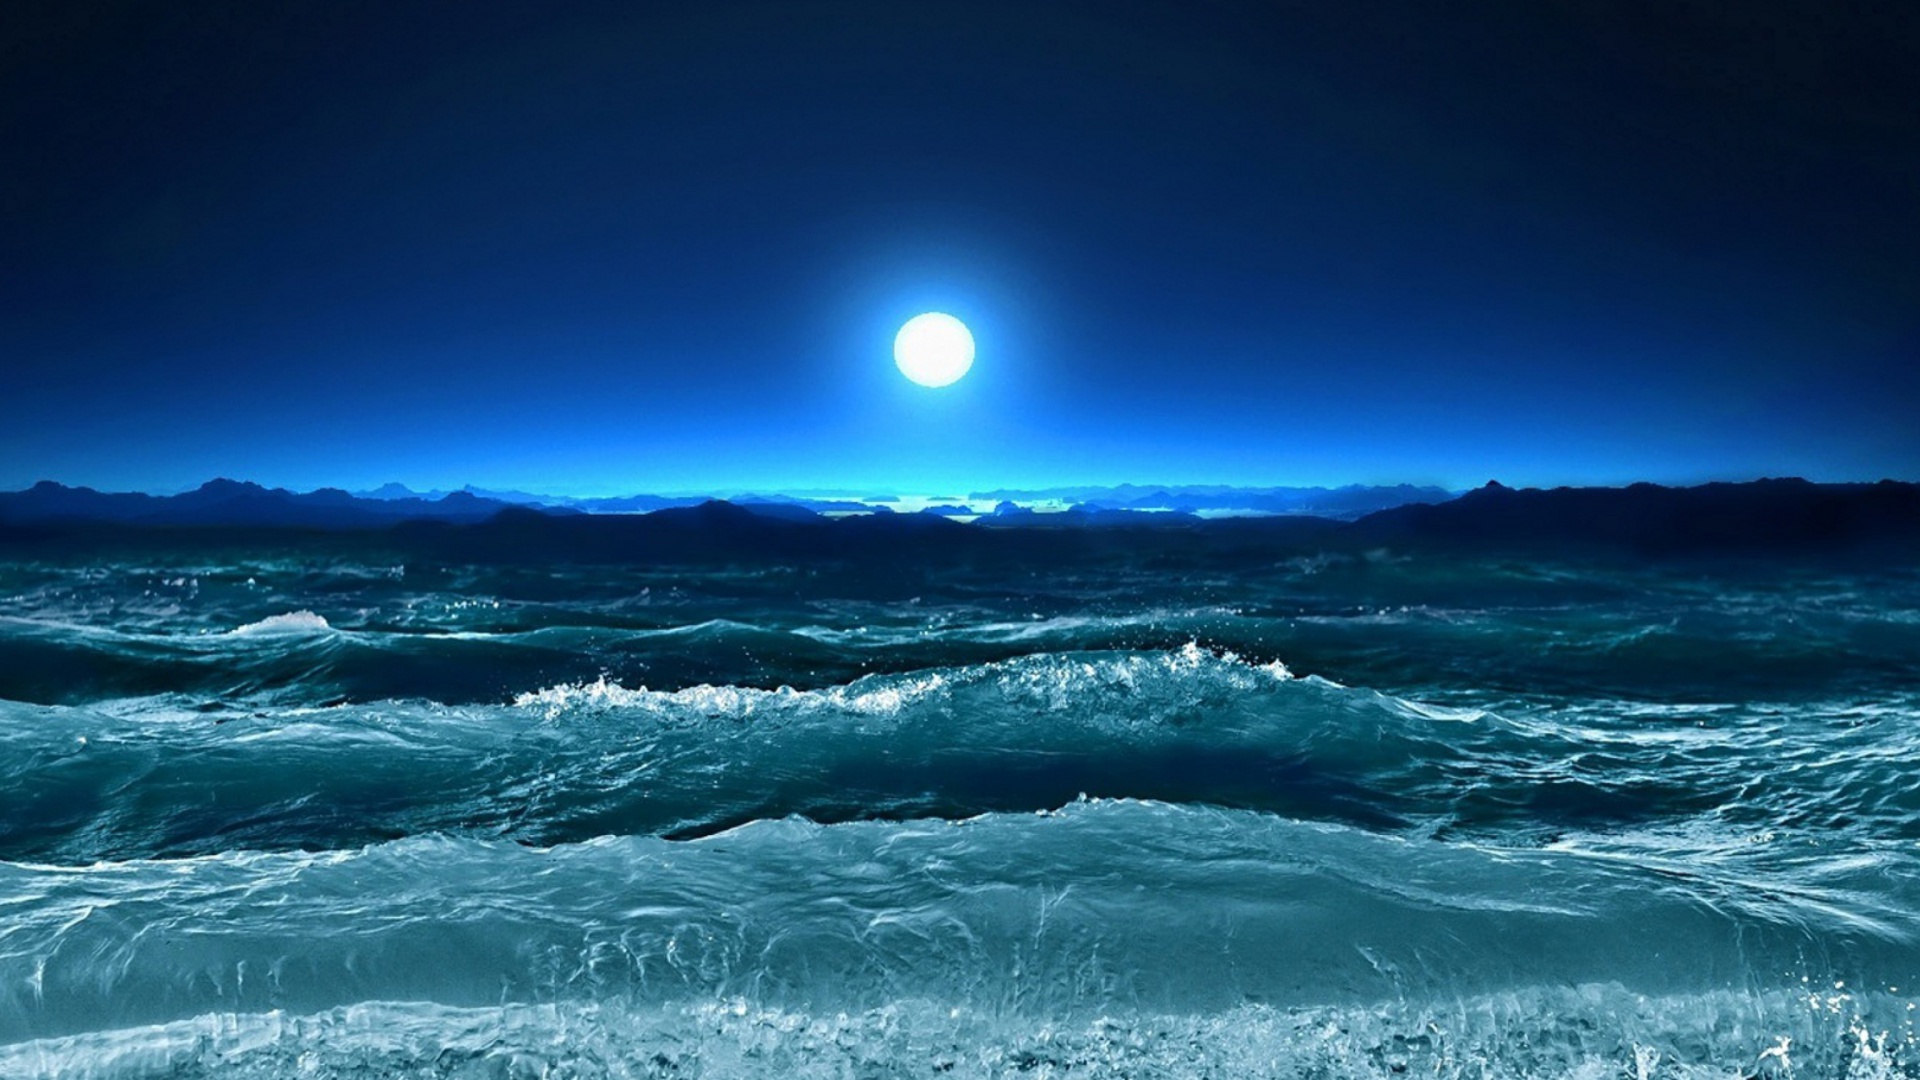 Ocean Waves Under Moon Light Wallpaper1920x1080 Wallpaper